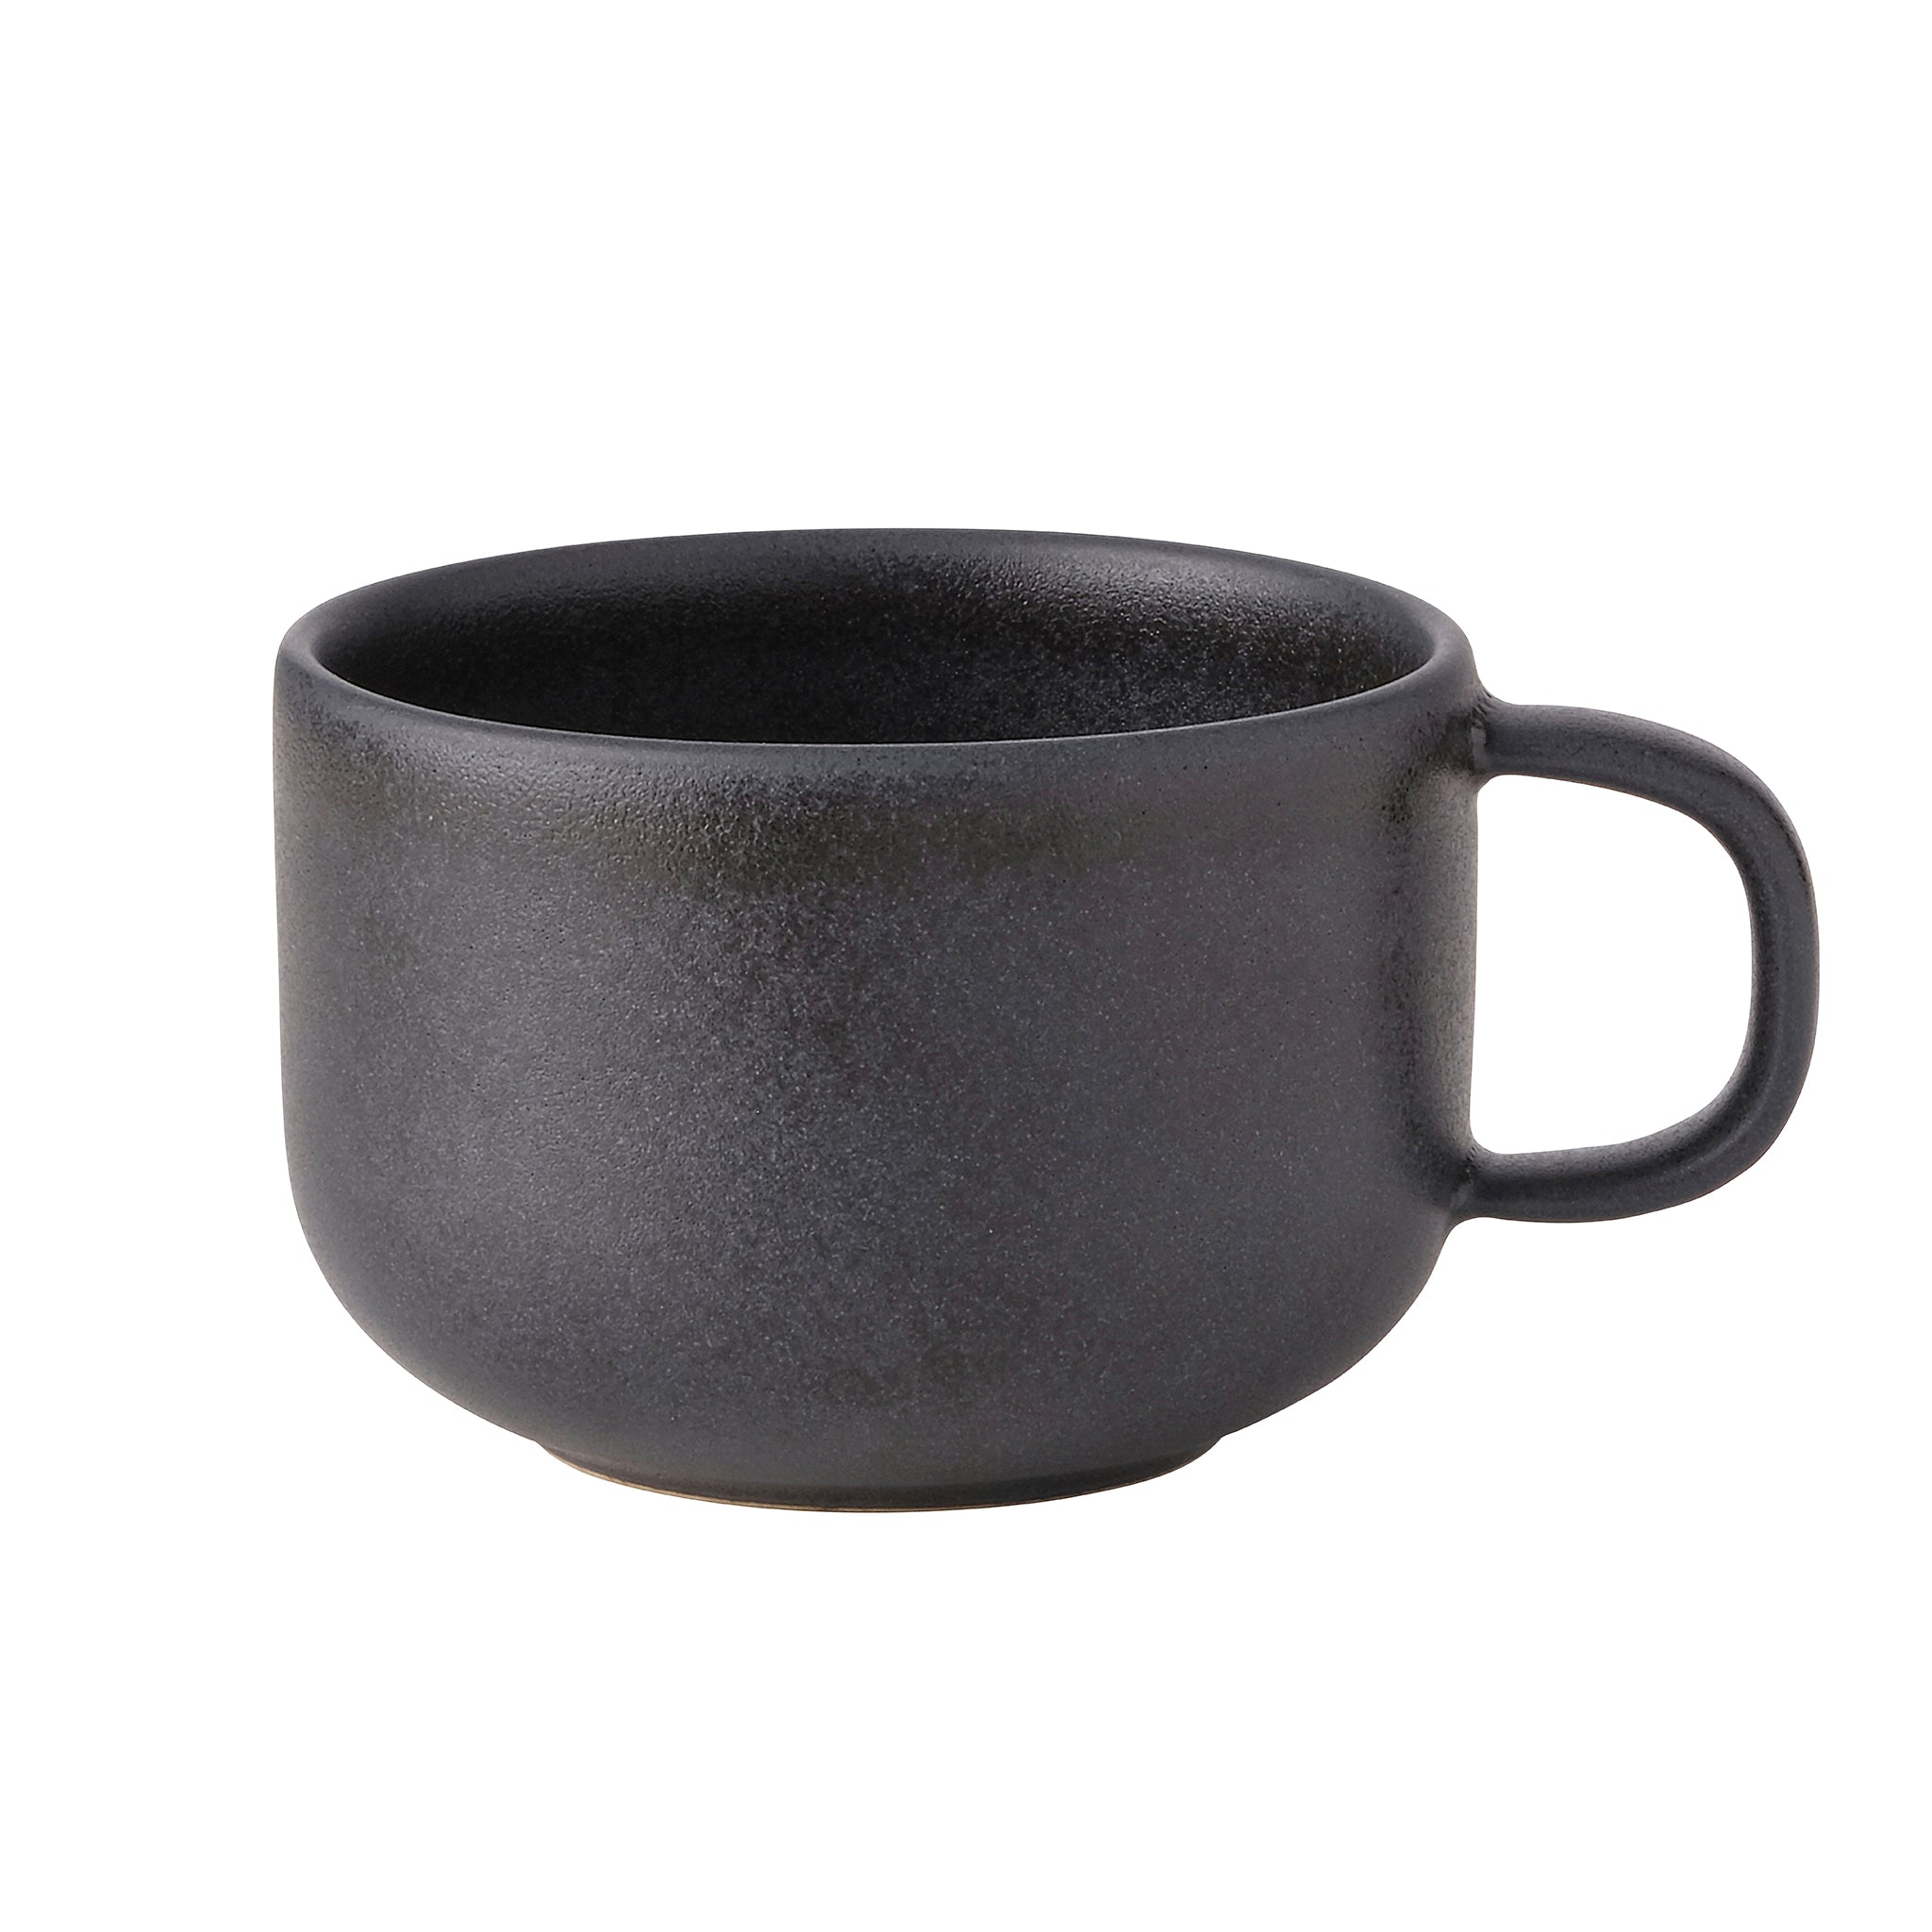 Obsidian Black Stoneware Cup 4.4" / 9.3oz Black